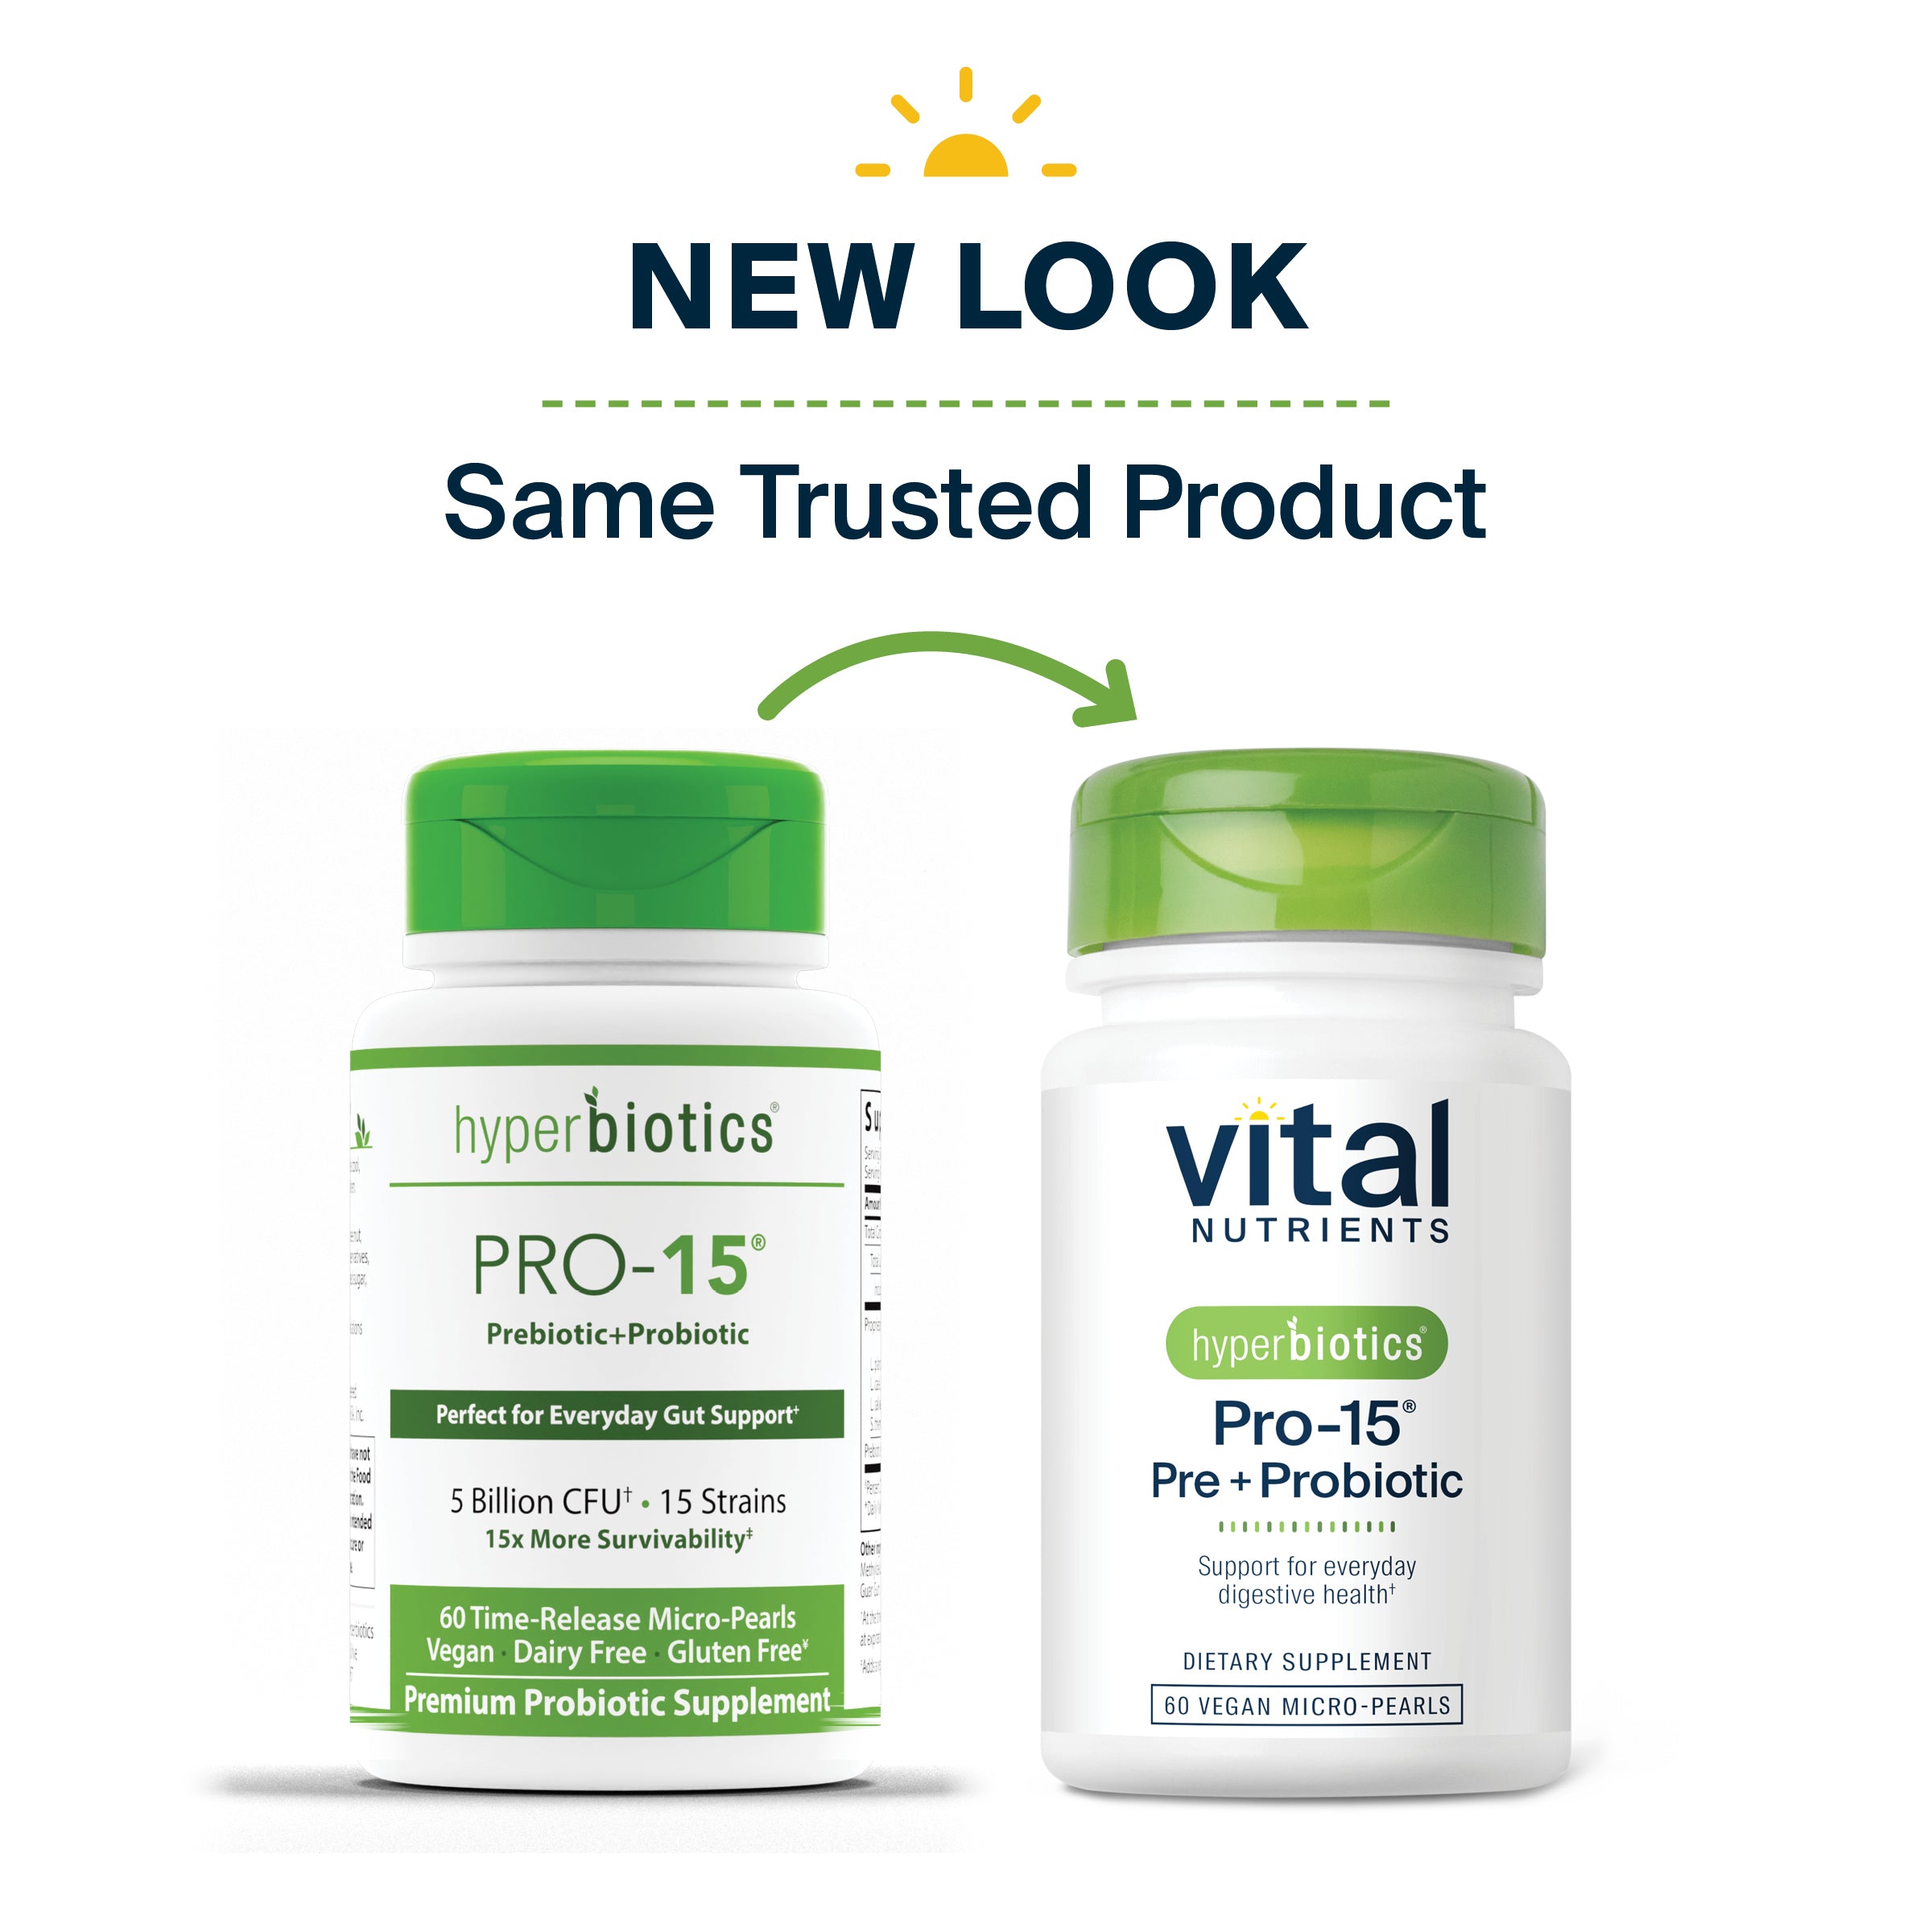 Hyperbiotics Pro-15 Pre+Probiotic 60 vegan micro-pearls new look, same trusted product.